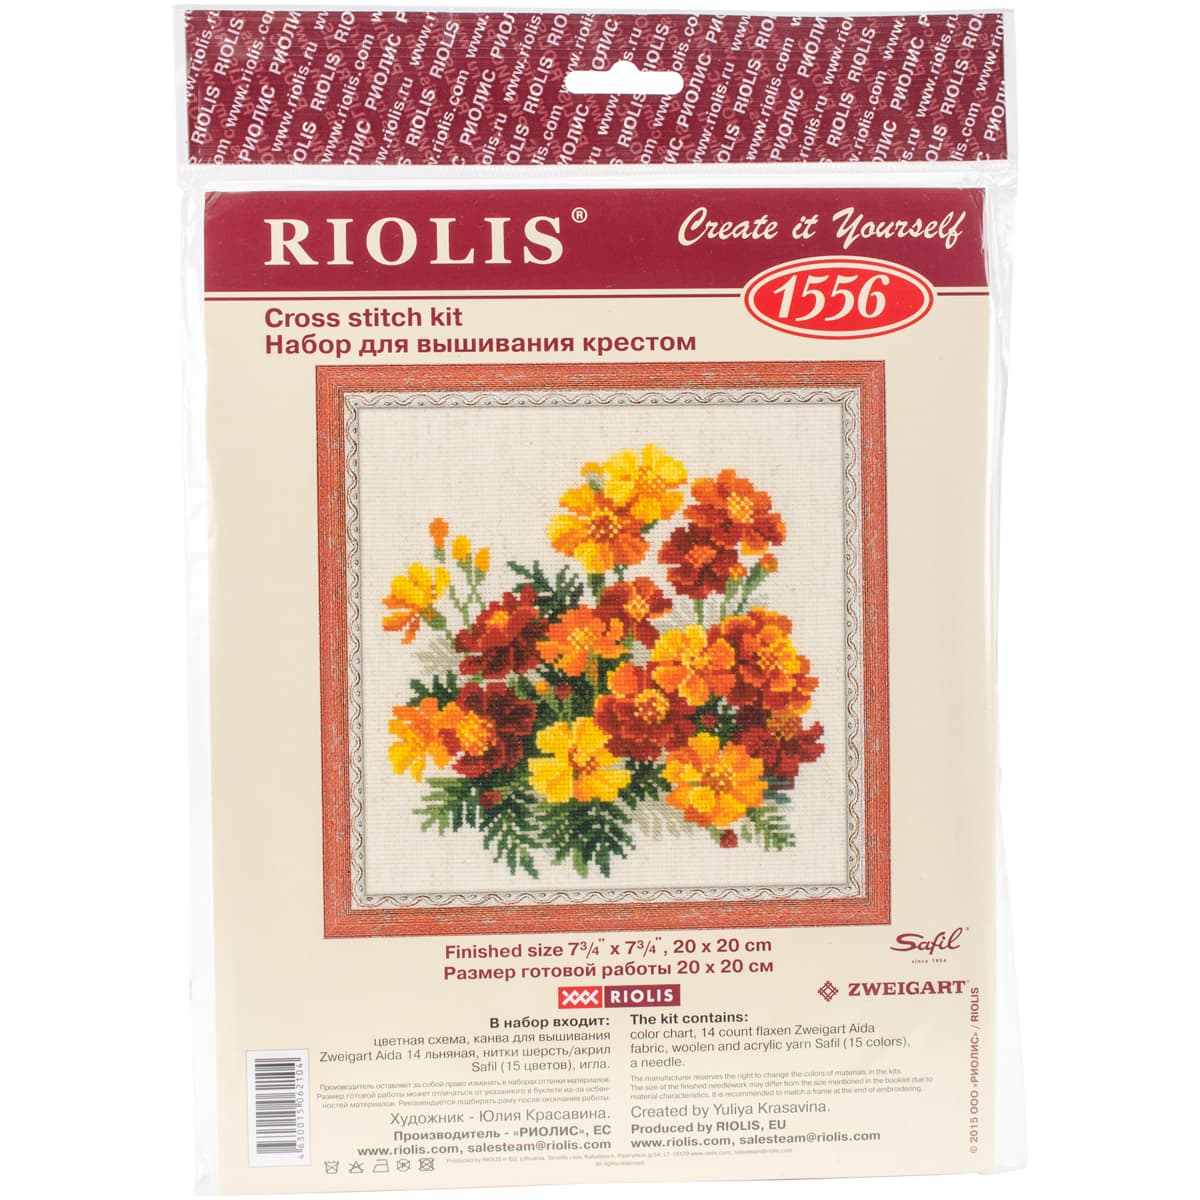 RIOLIS Marigolds Counted Cross Stitch Kit